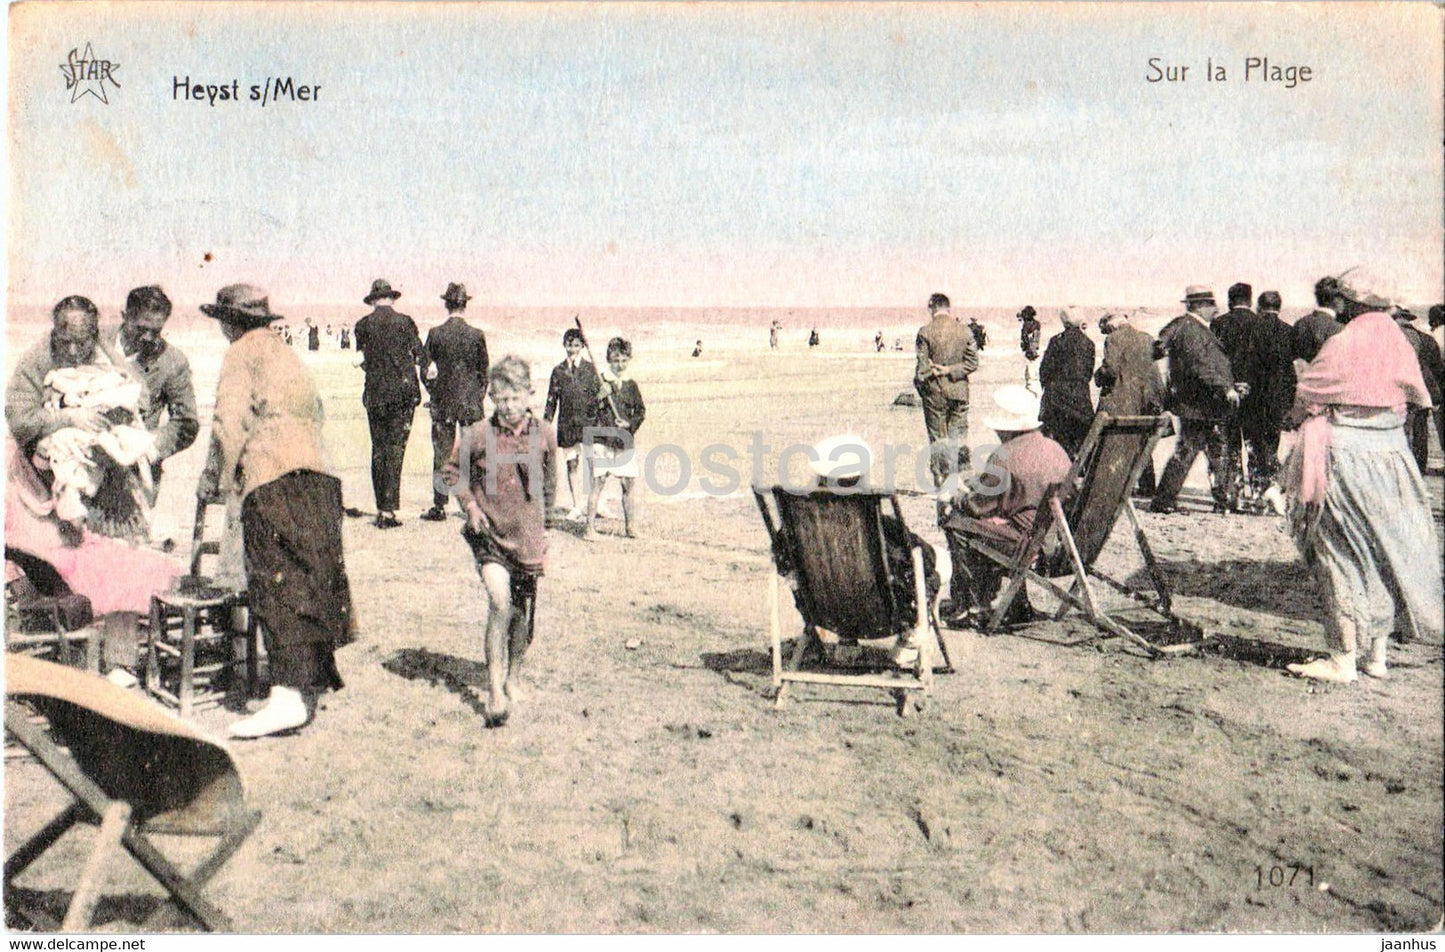 Heyst s Mer - Sur la Plage - 1071 - old postcard - 1925 - Belgium - used - JH Postcards